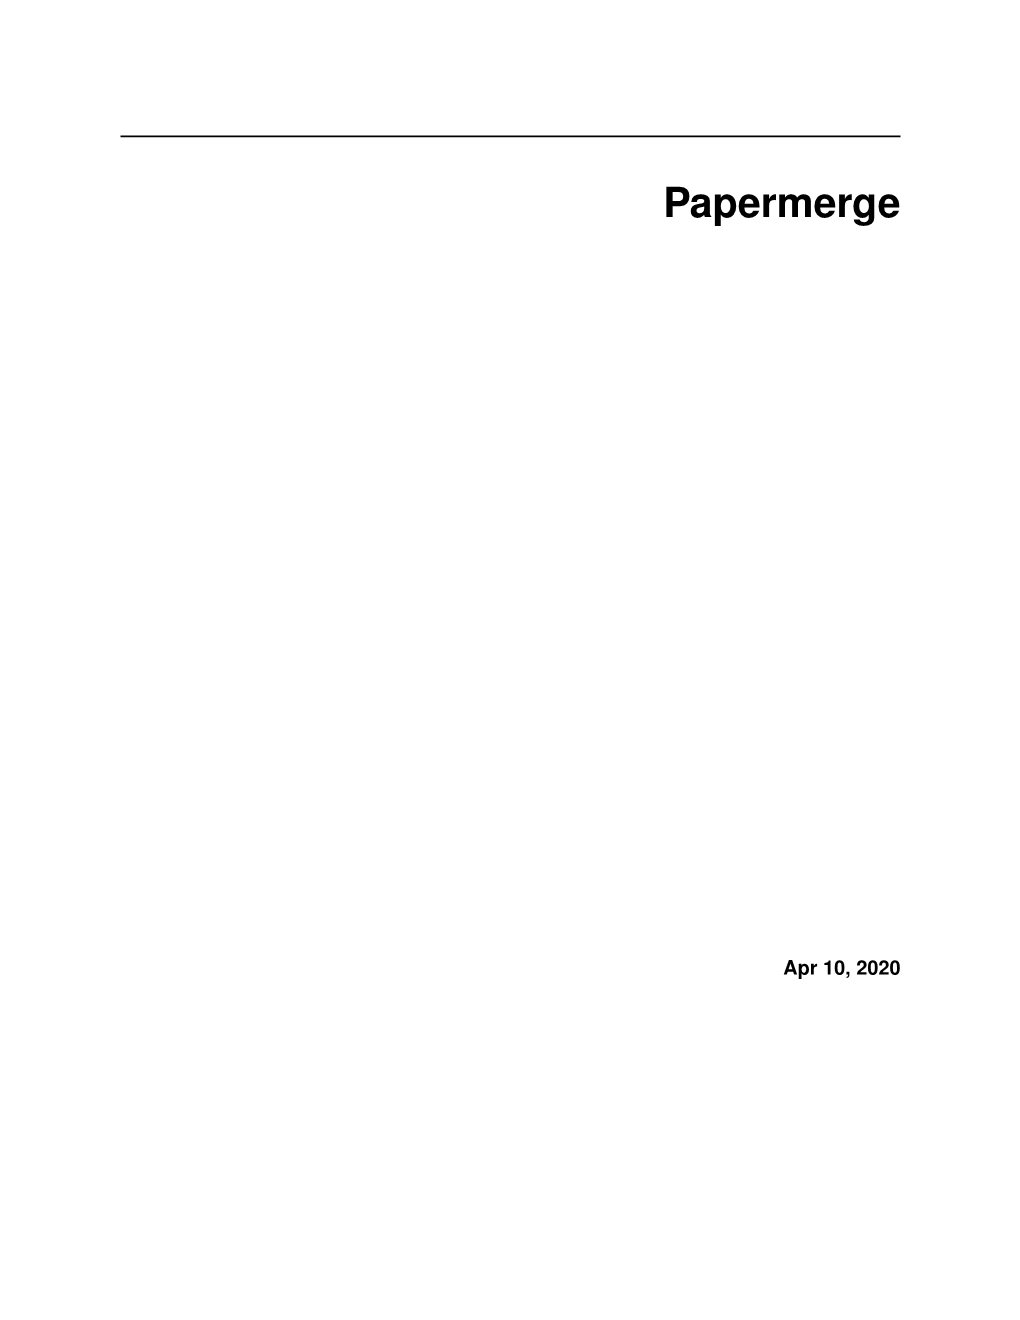 Papermerge Documentation